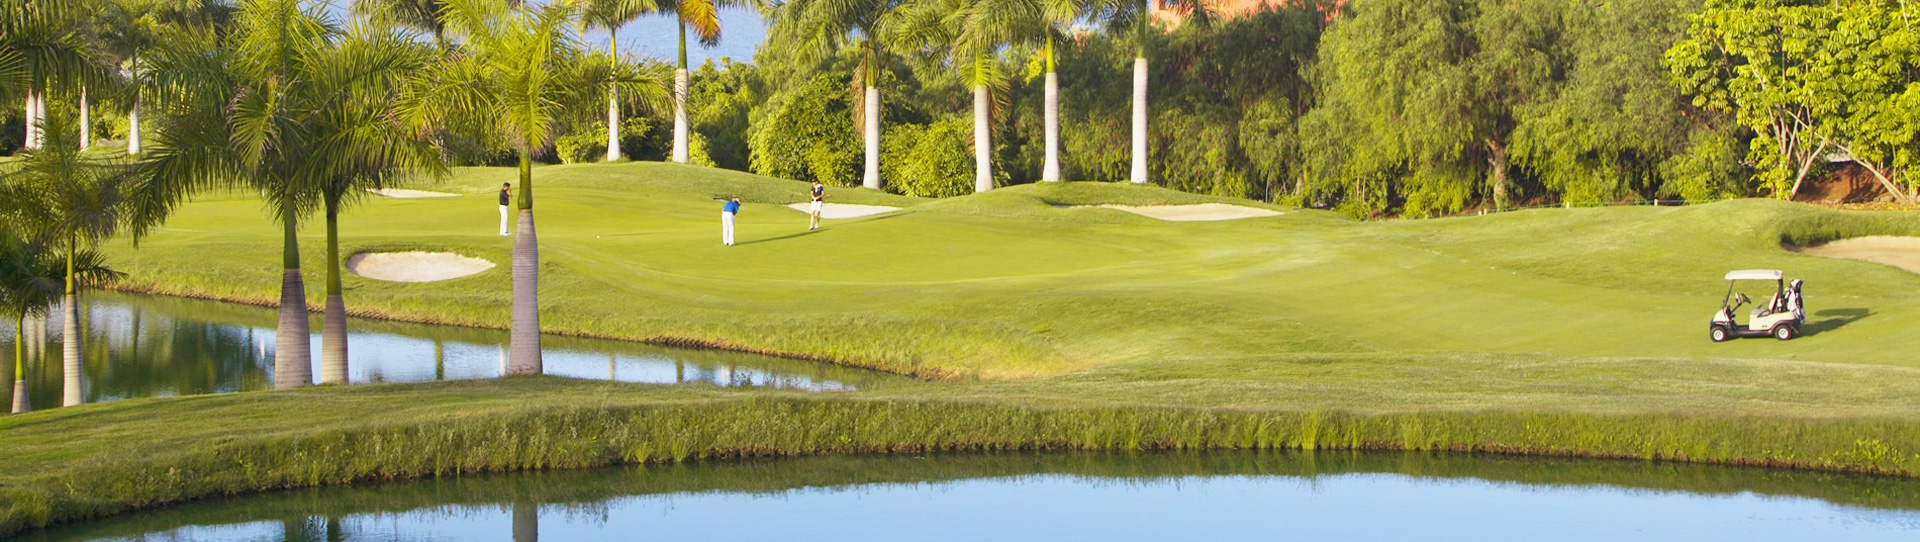 Spain golf courses - Abama Golf Course - Photo 3